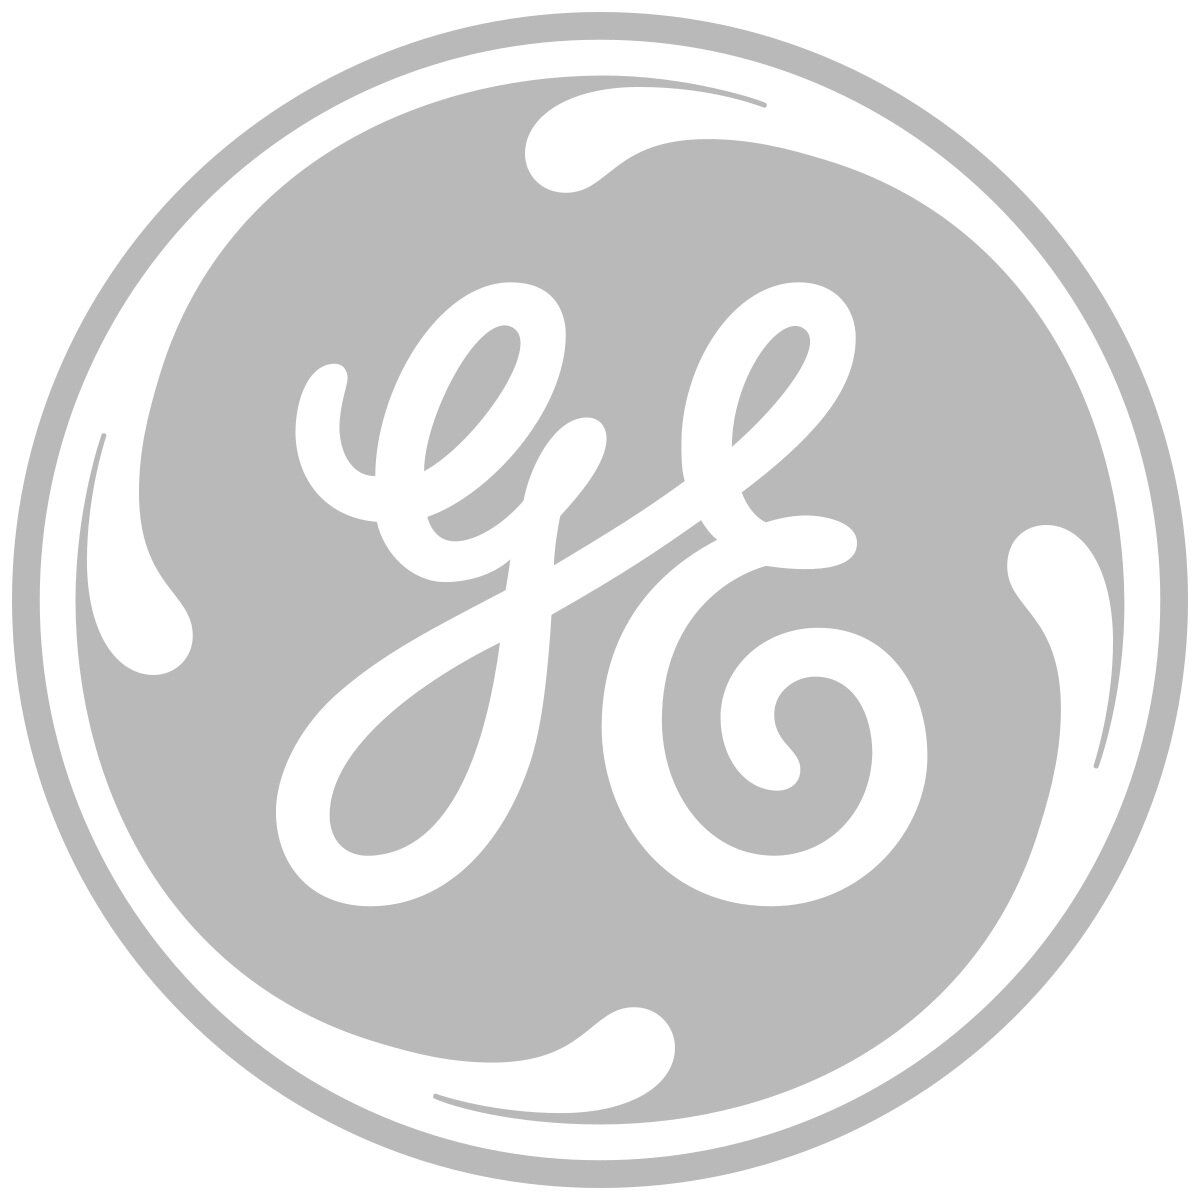 1200px-General_Electric_logo.jpg